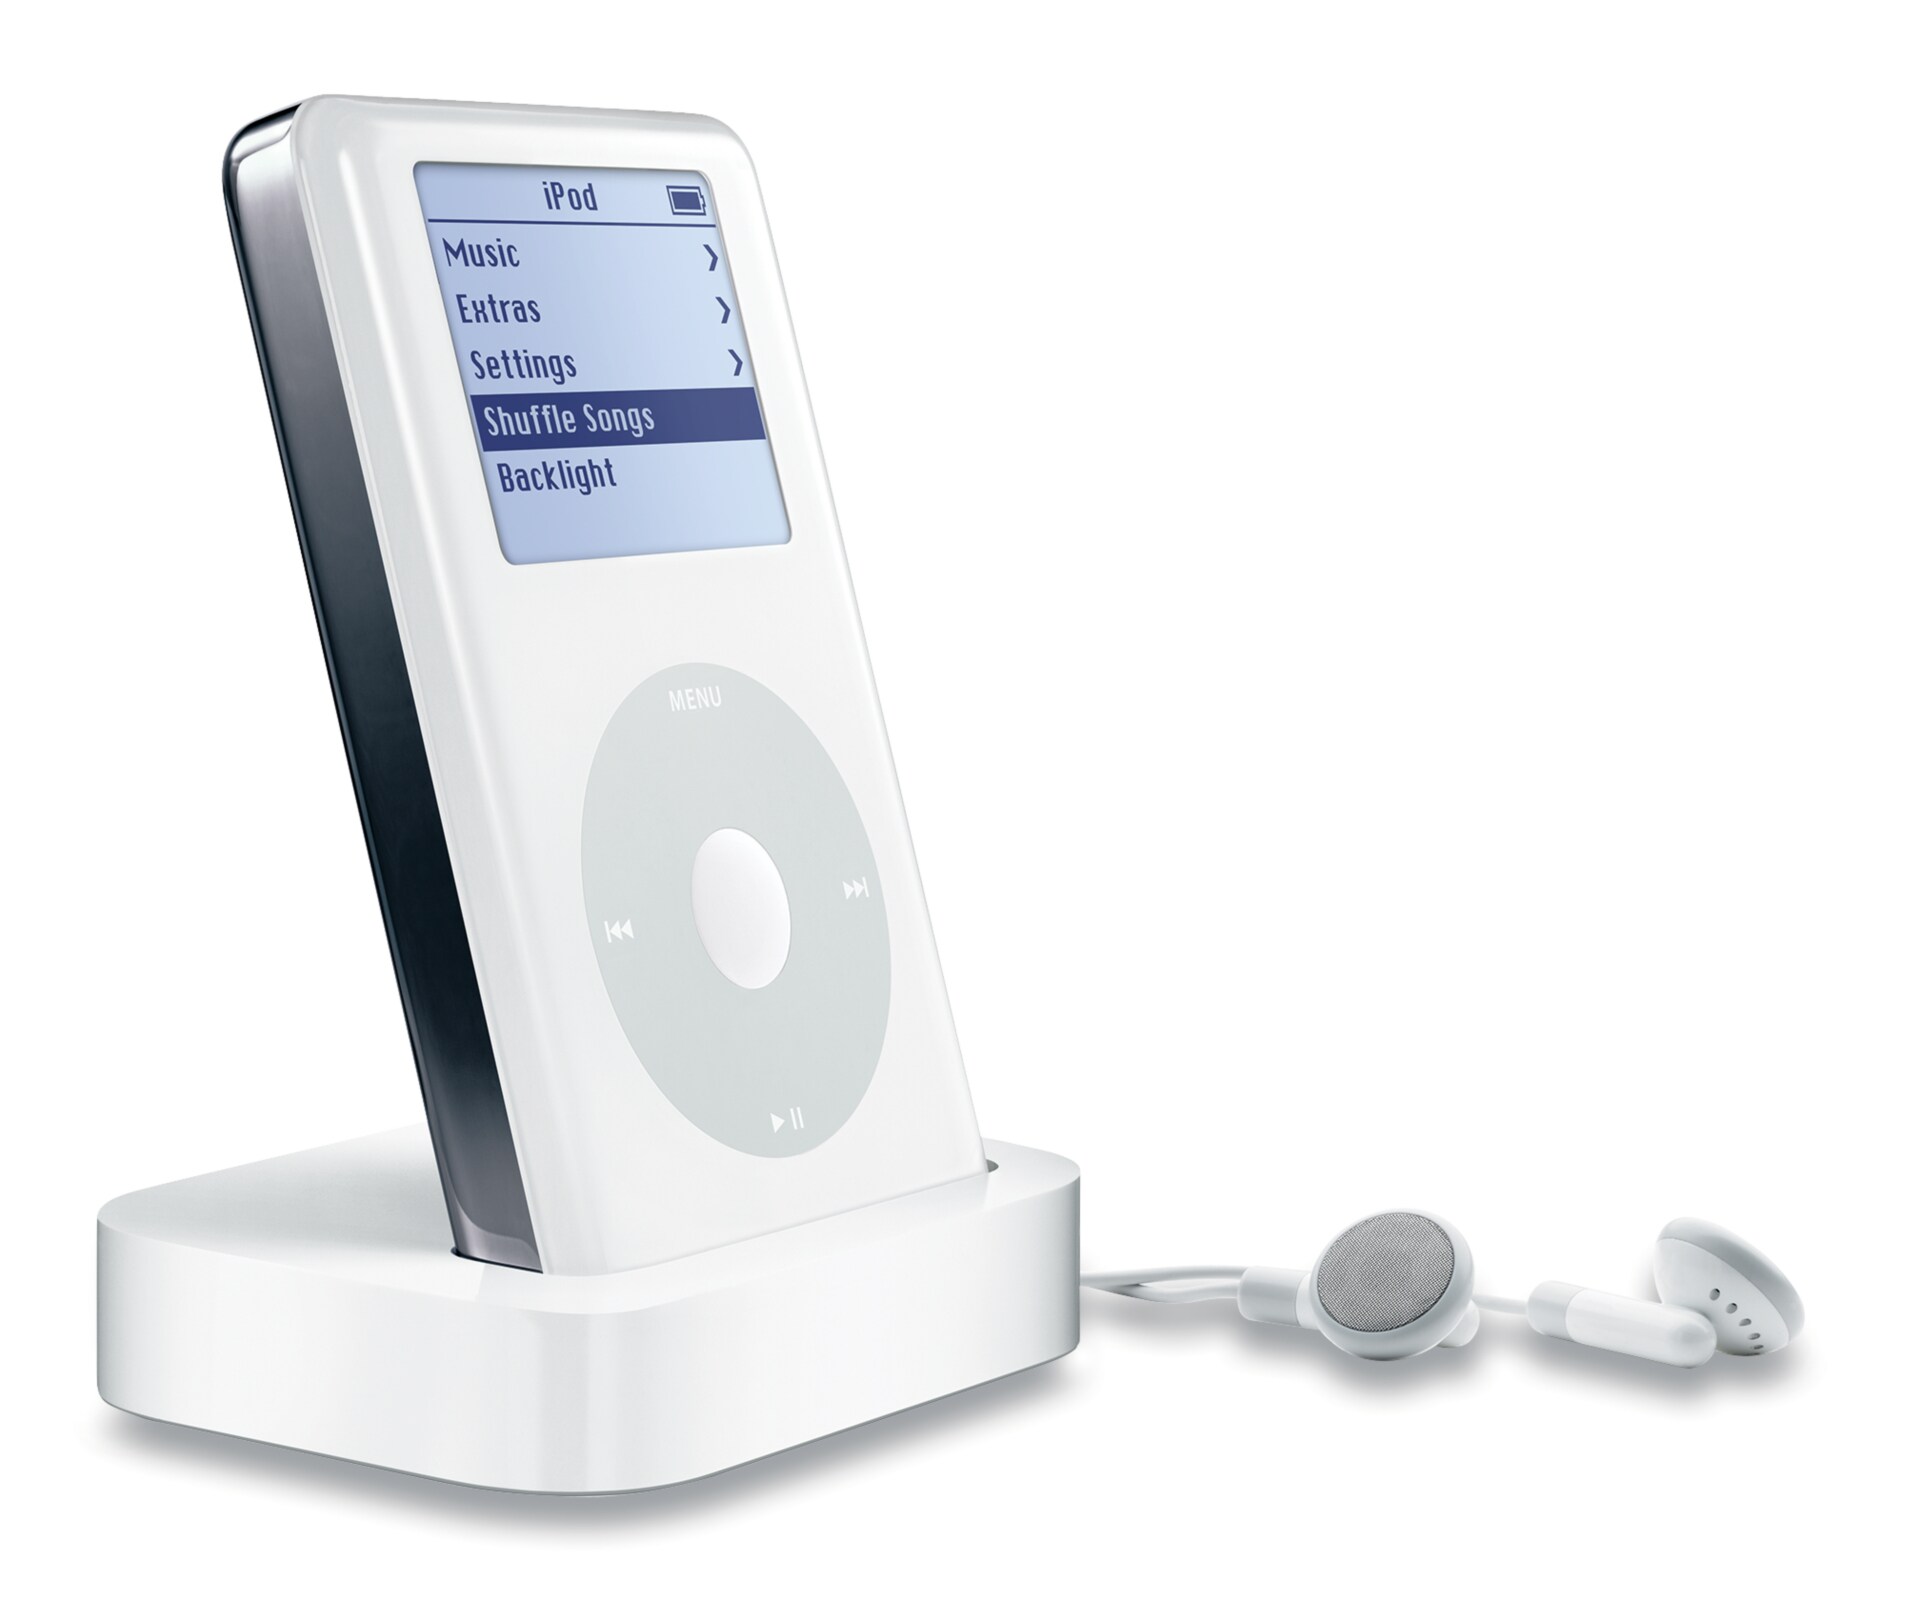 Apple 40GB iPod with Click Wheel